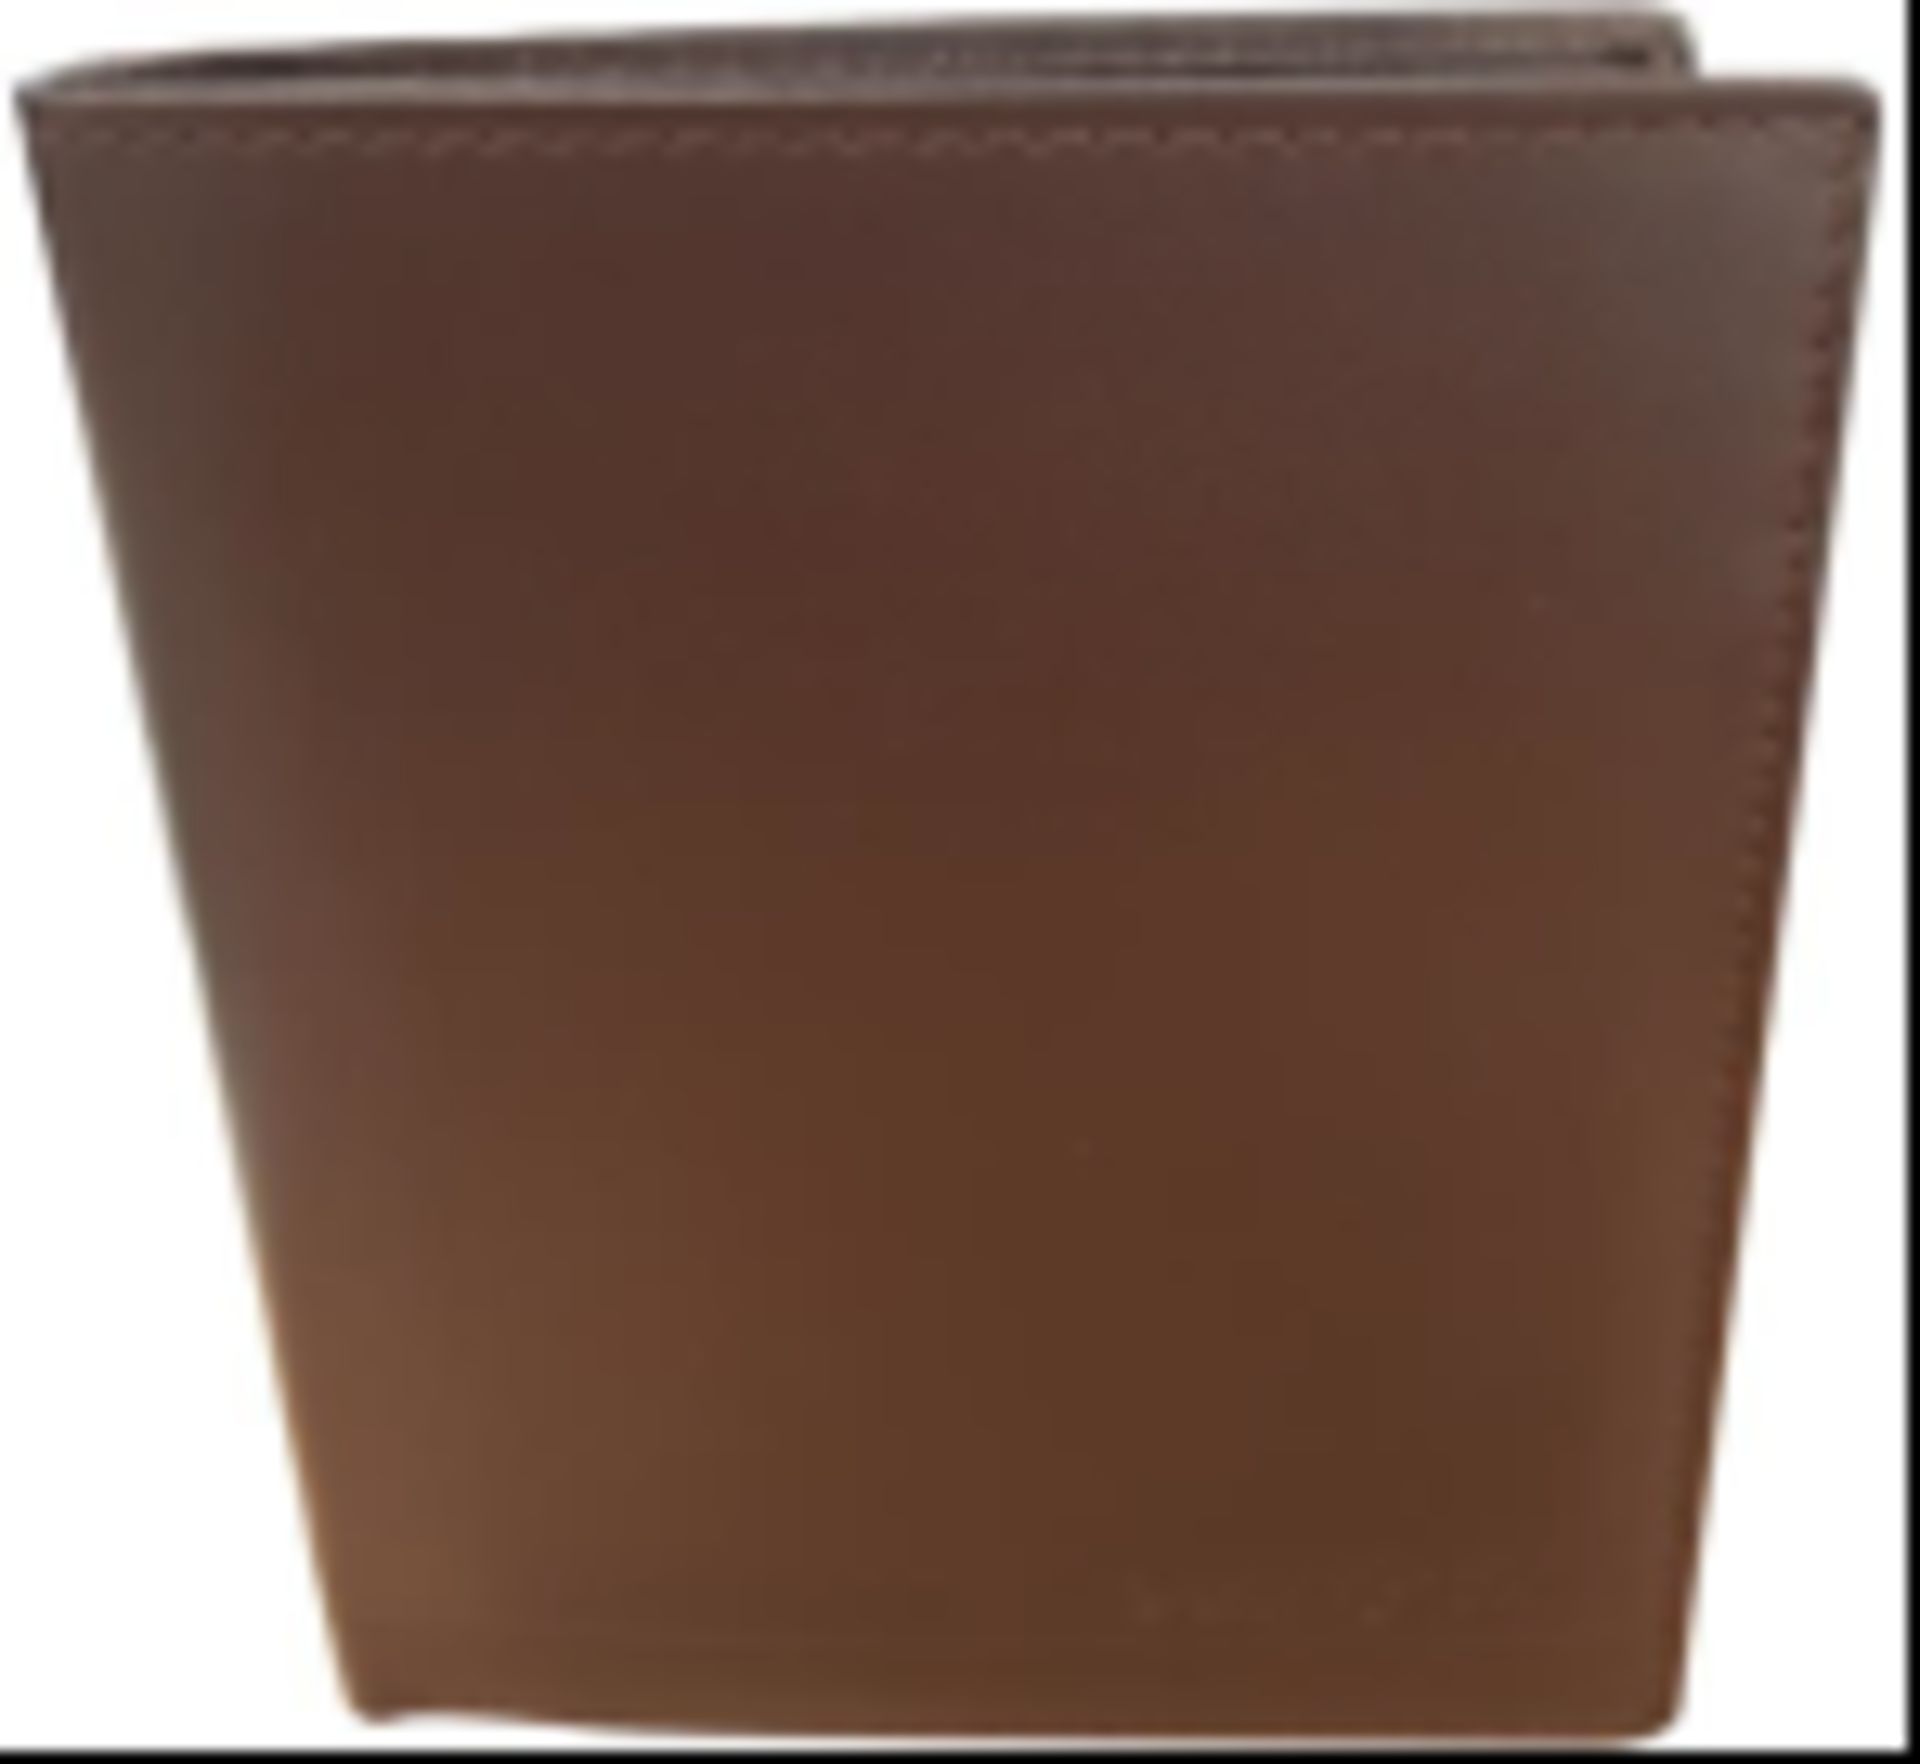 V Brand New Samsonite Gents Black Leather Wallet - 5 Credit Card Slots 2 Larger Slots - Double Zip - Image 2 of 3